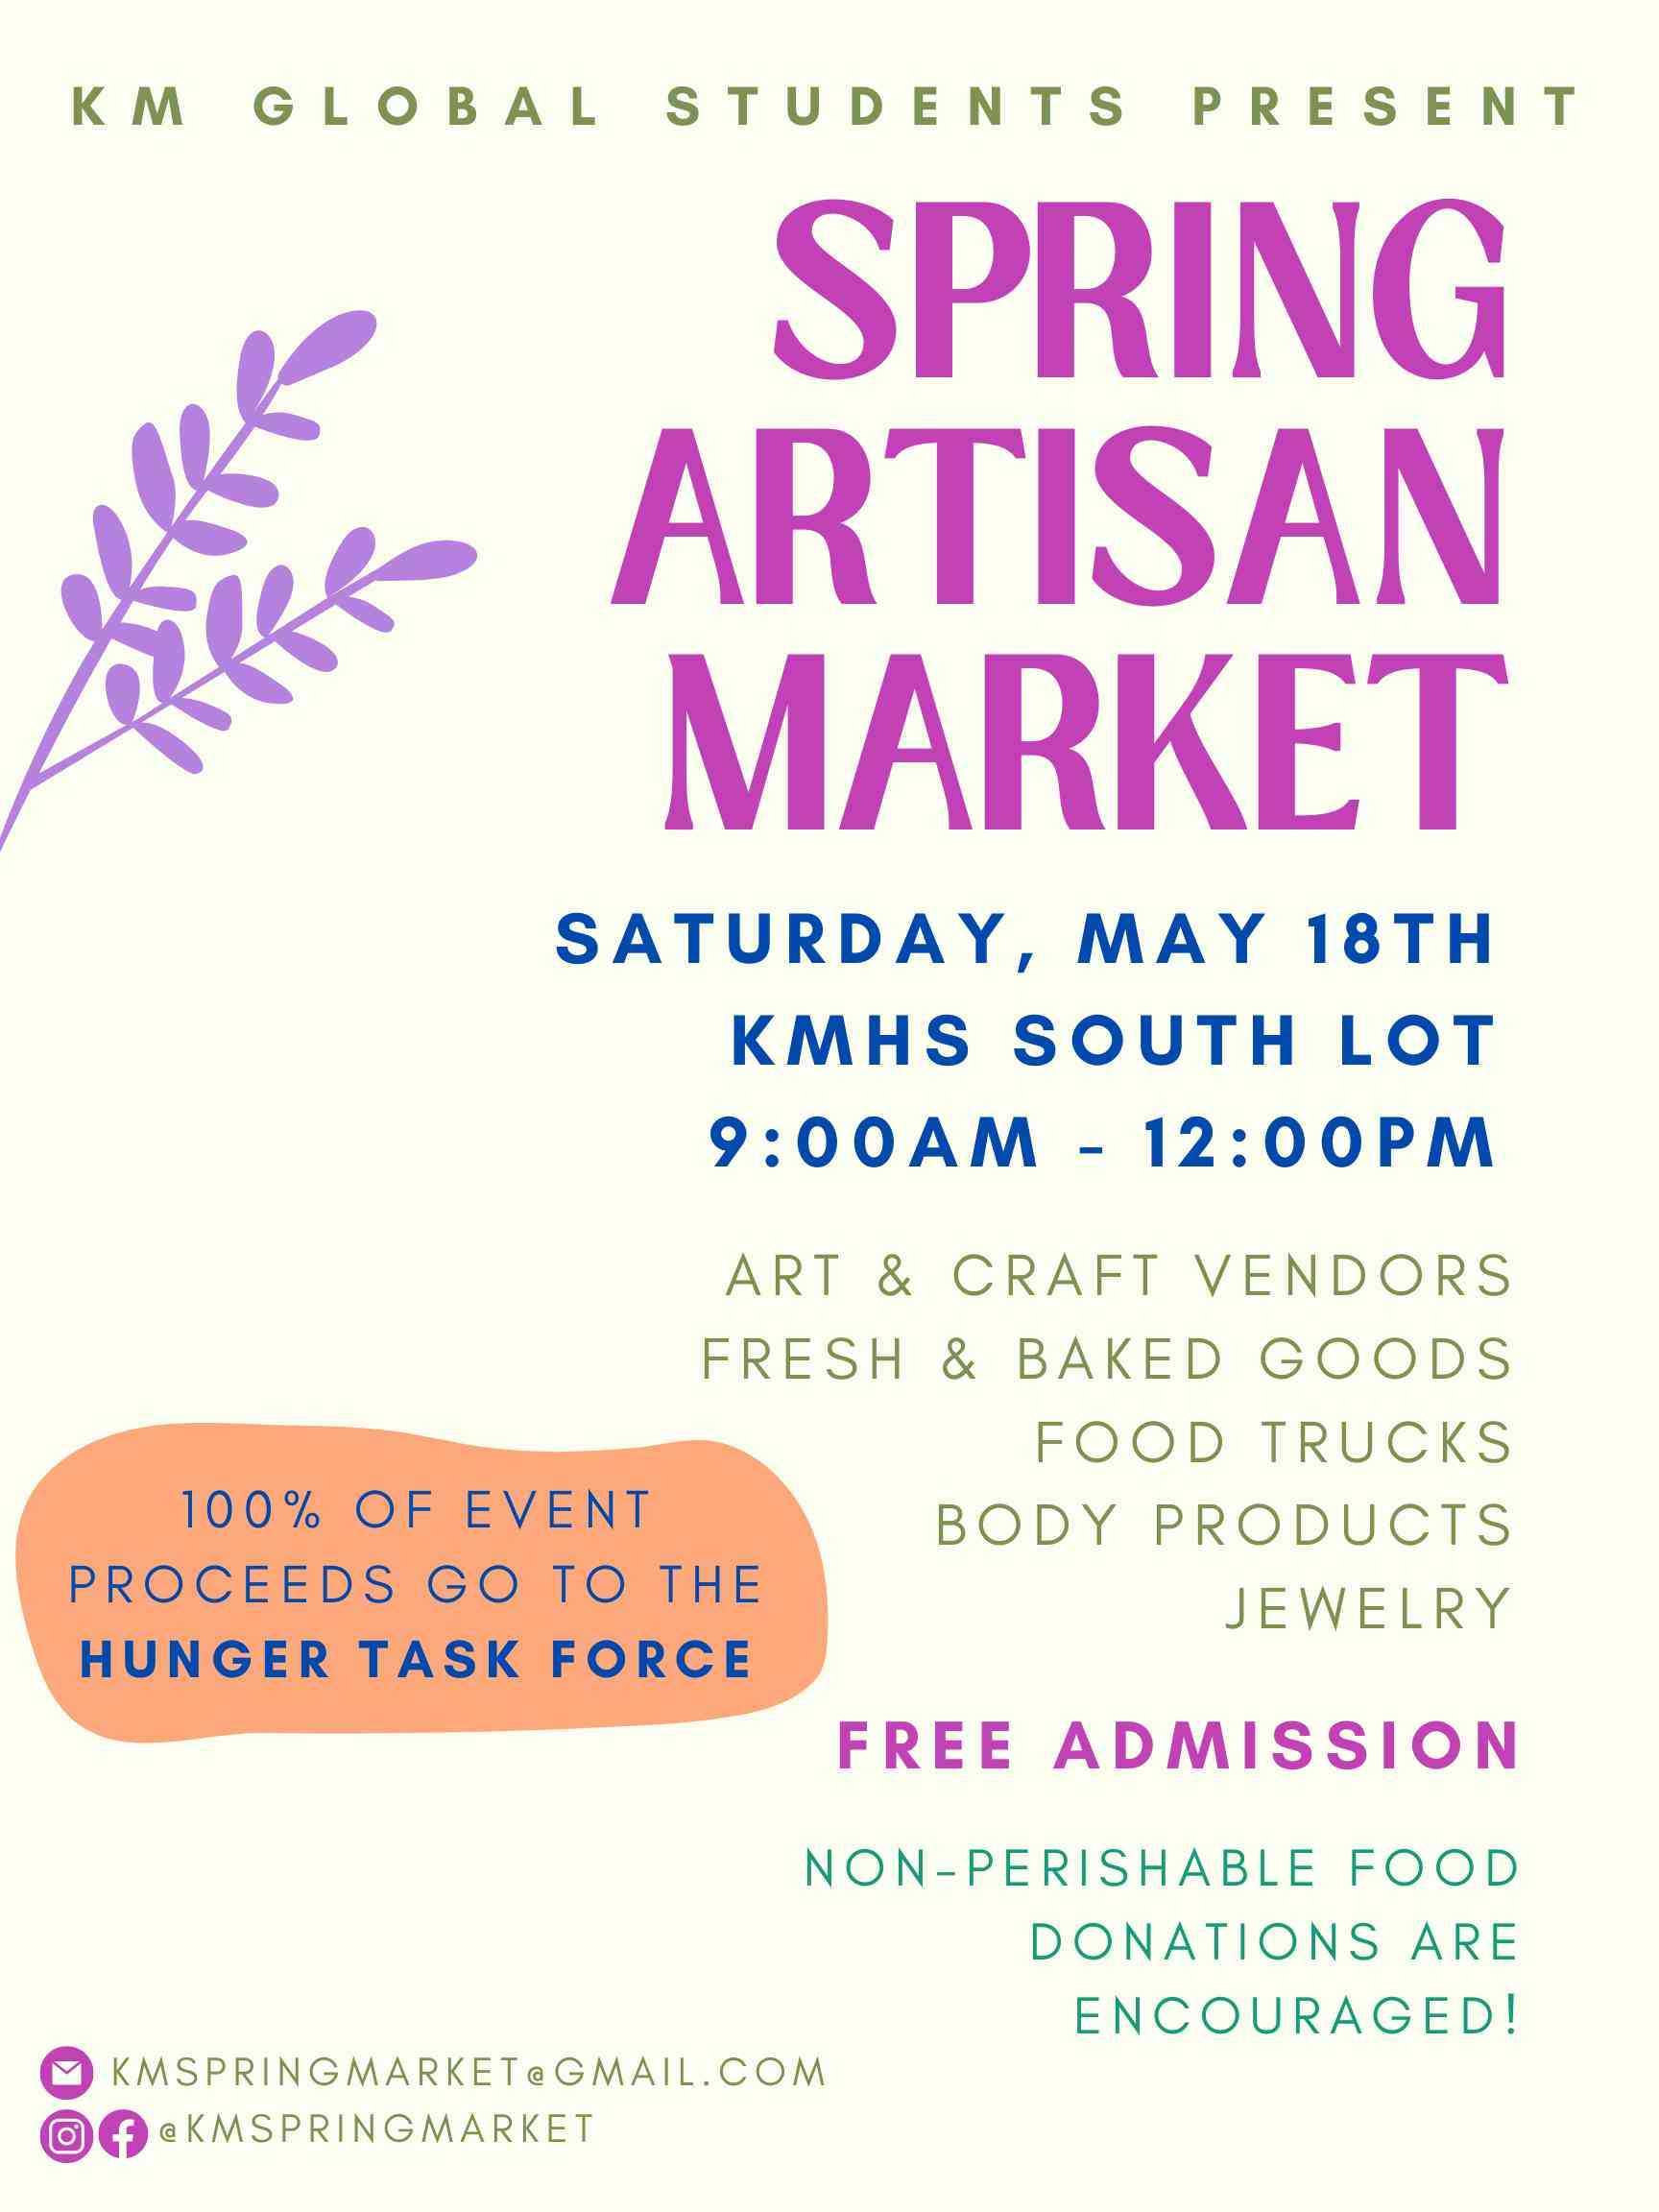 Title: Kettle Moraine Spring Artisan Market Image